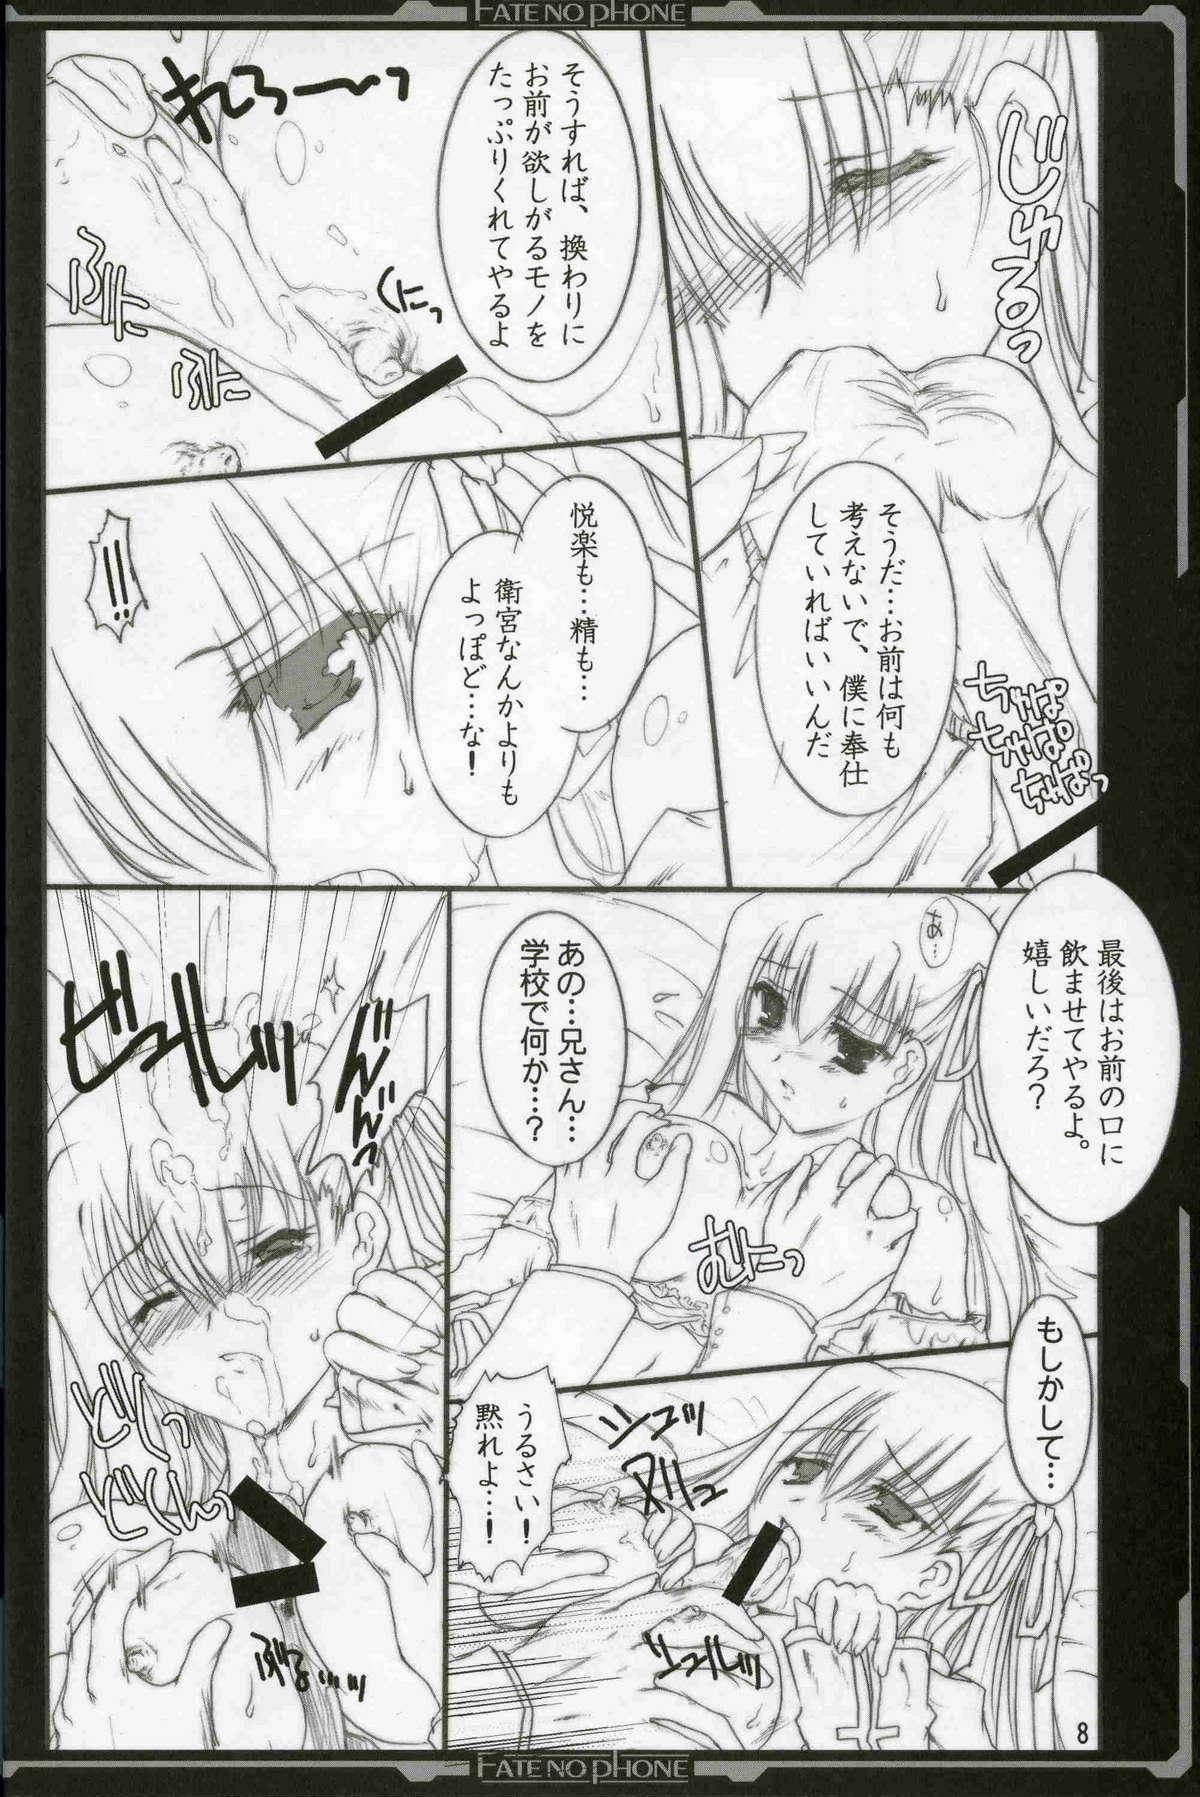 Cream Pie Fate/no phone - Fate stay night Ex Girlfriends - Page 7